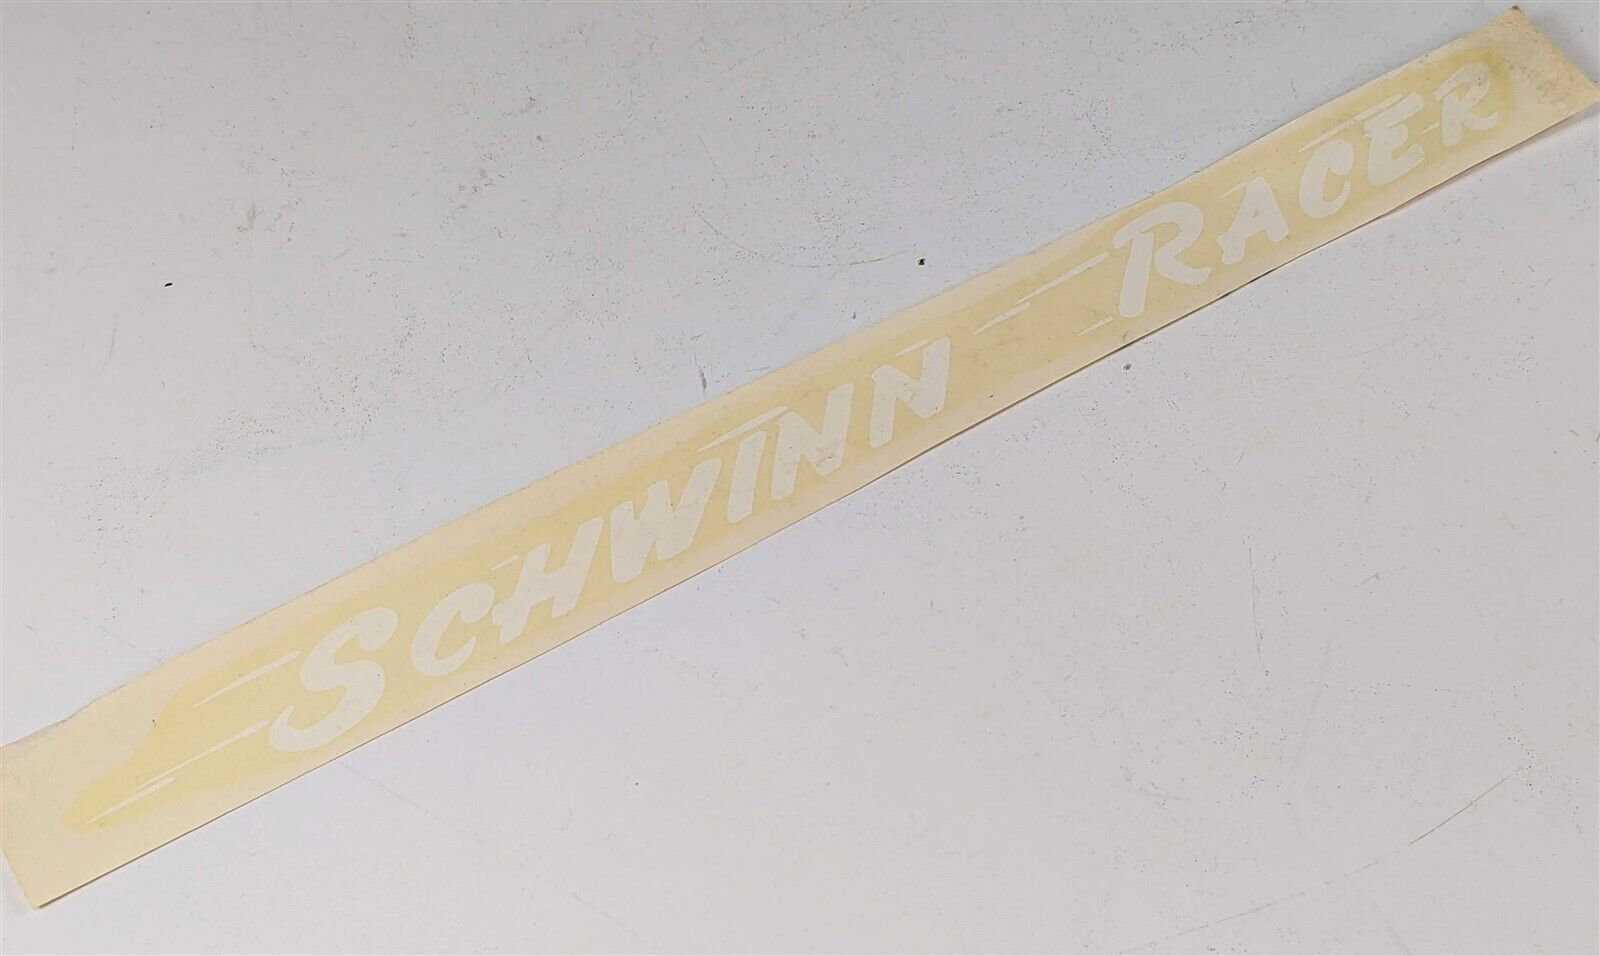 Schwinn Racer White Chainguard Original Water Transfer Decal 1957